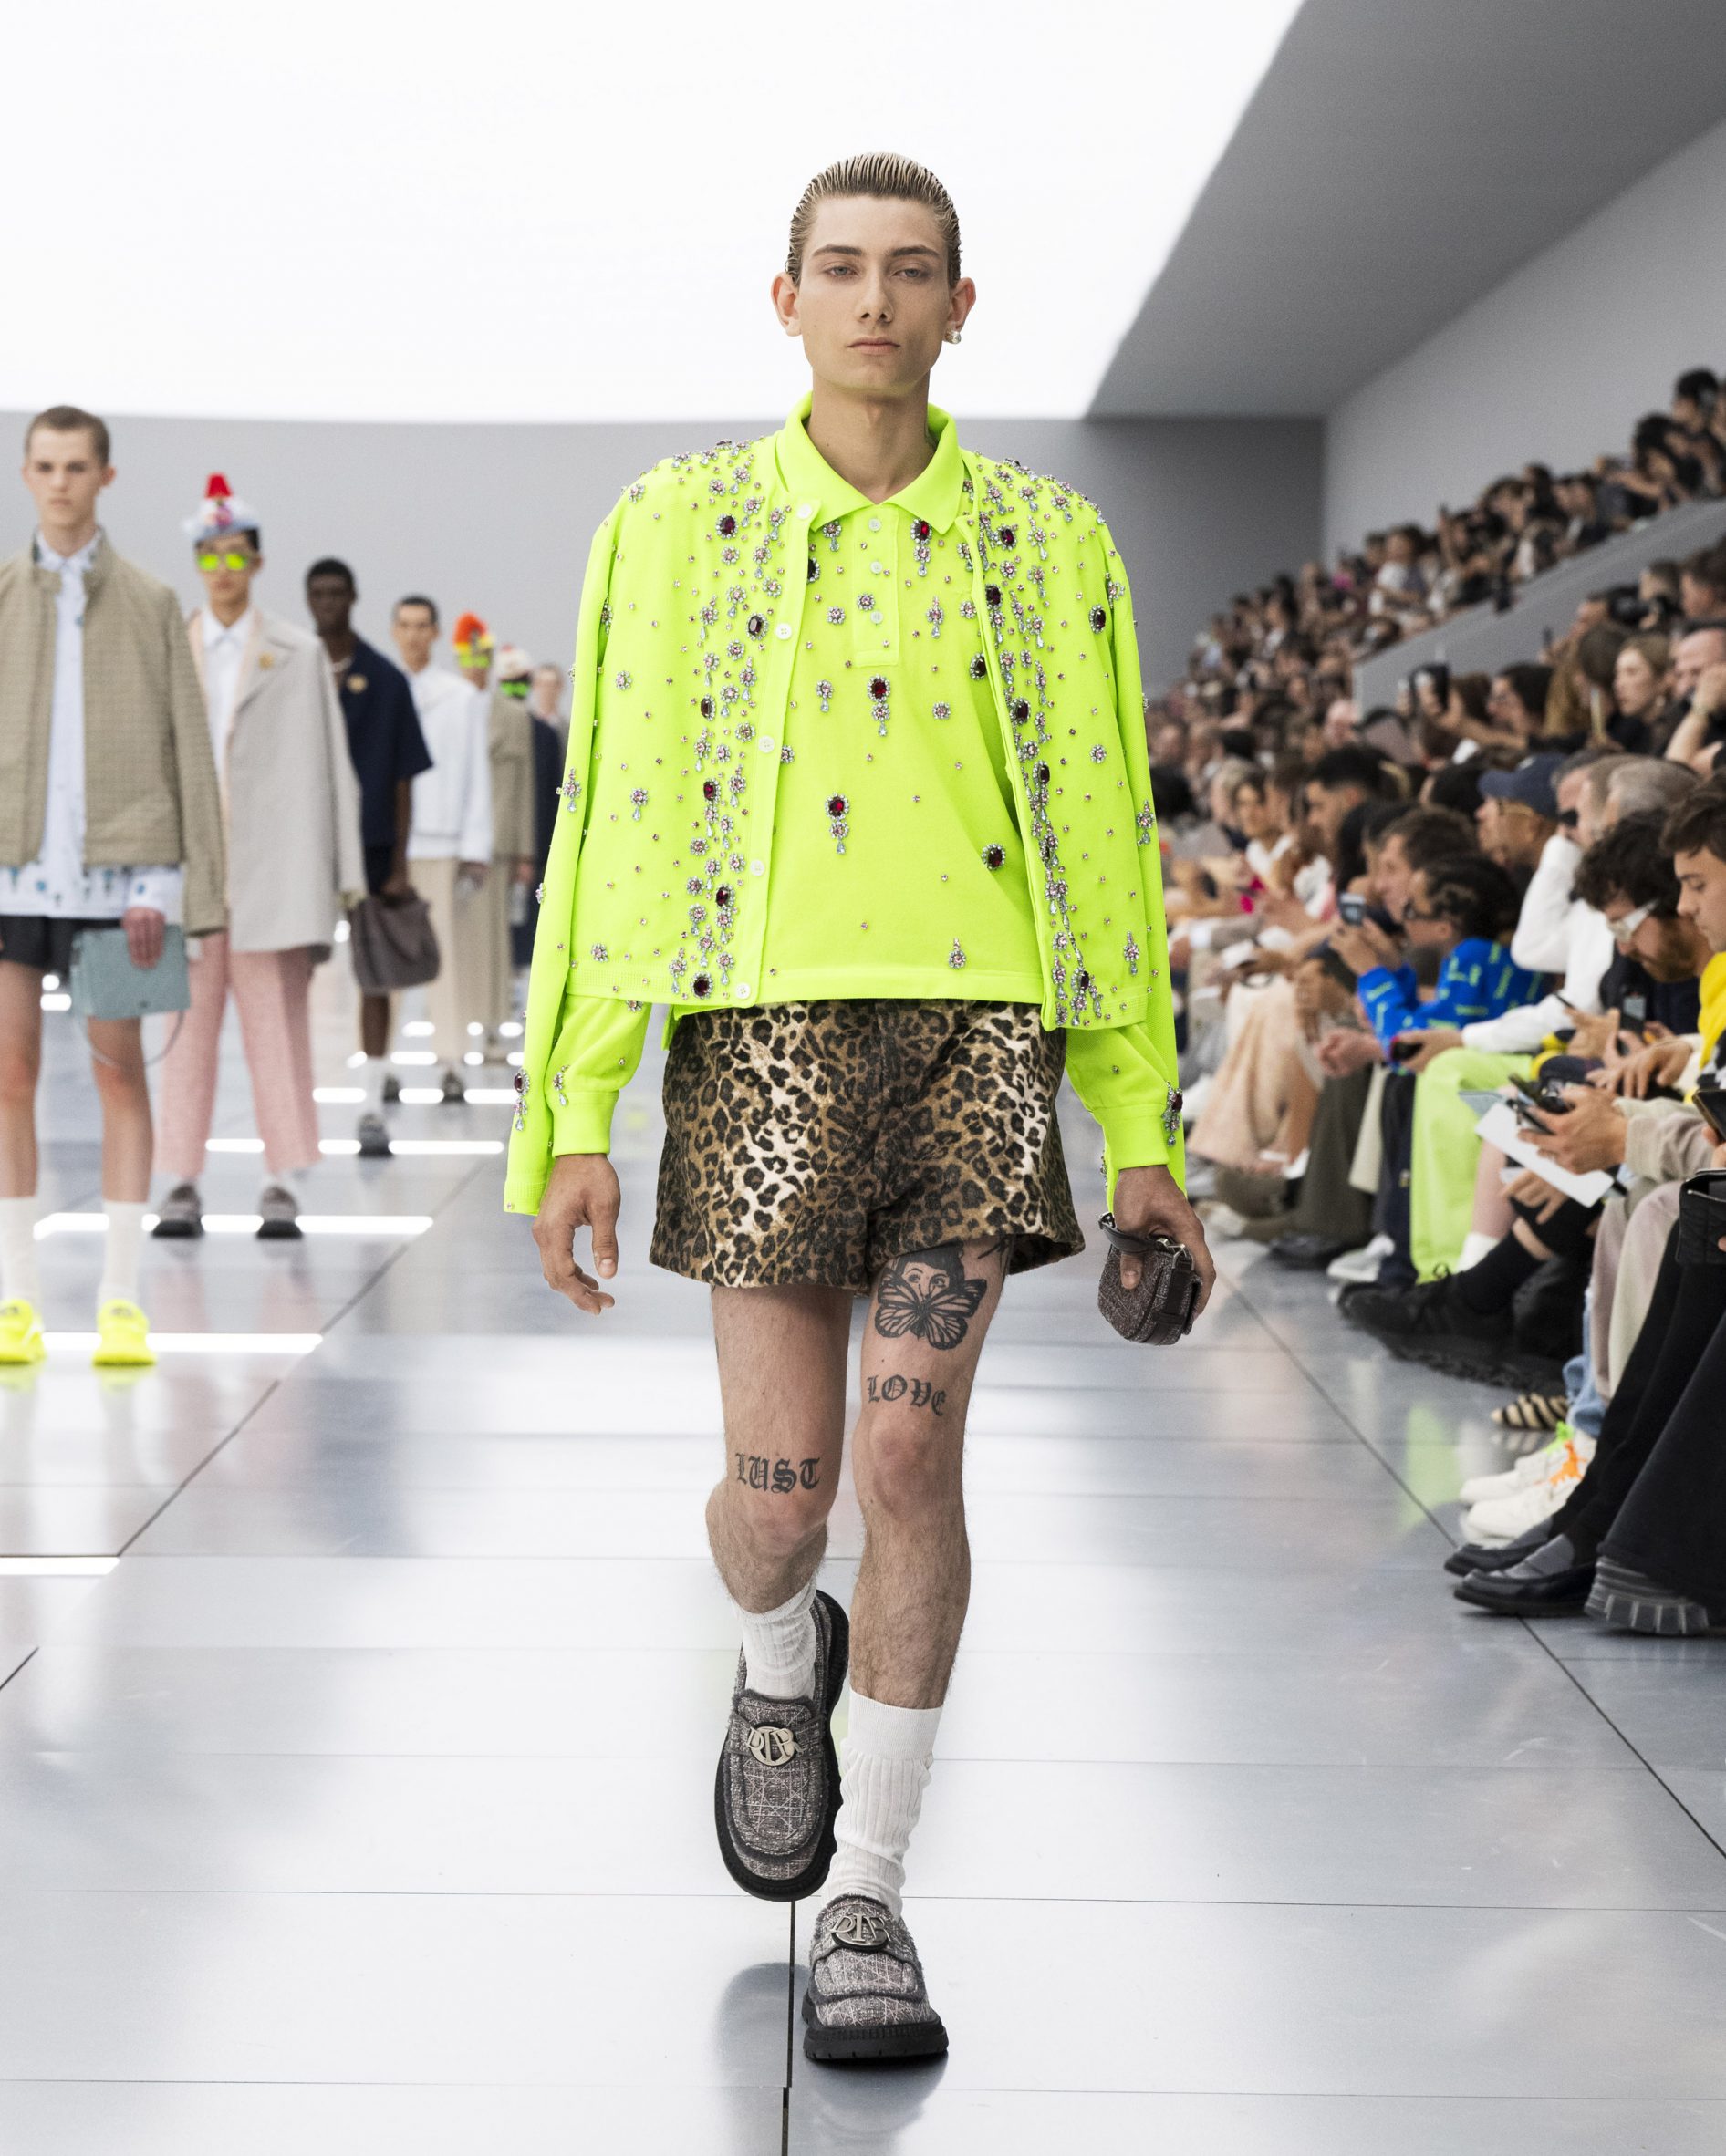 Dior's Kim Jones sends models rising up from the floor at Paris Fashion  Week